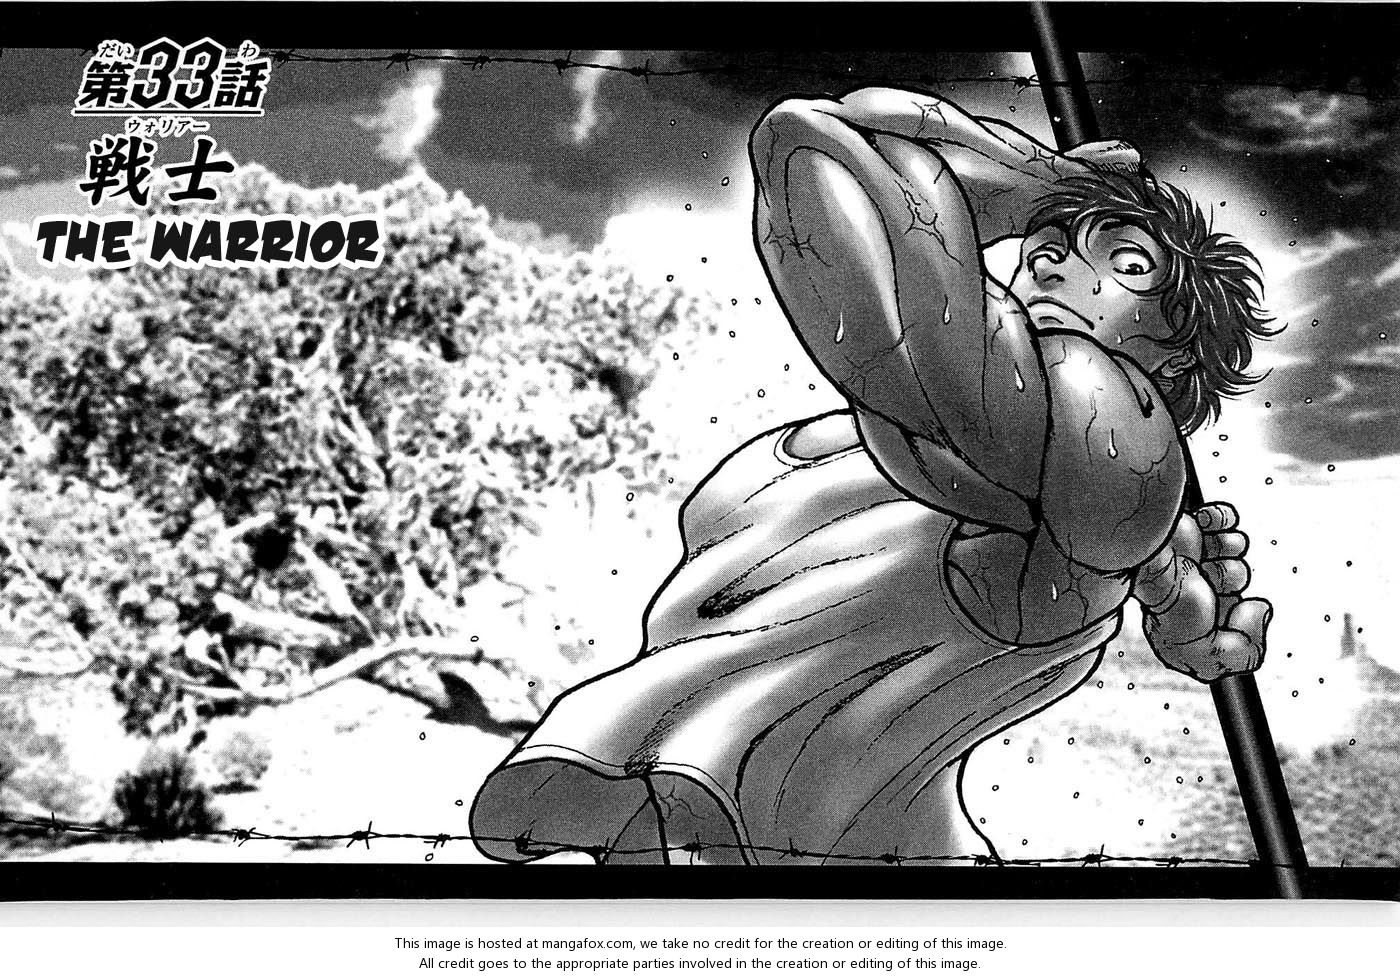 Featured image of post Bakis Demon Back After a very intense fight yujiro hanma gives kaku kaioh the finishing blow